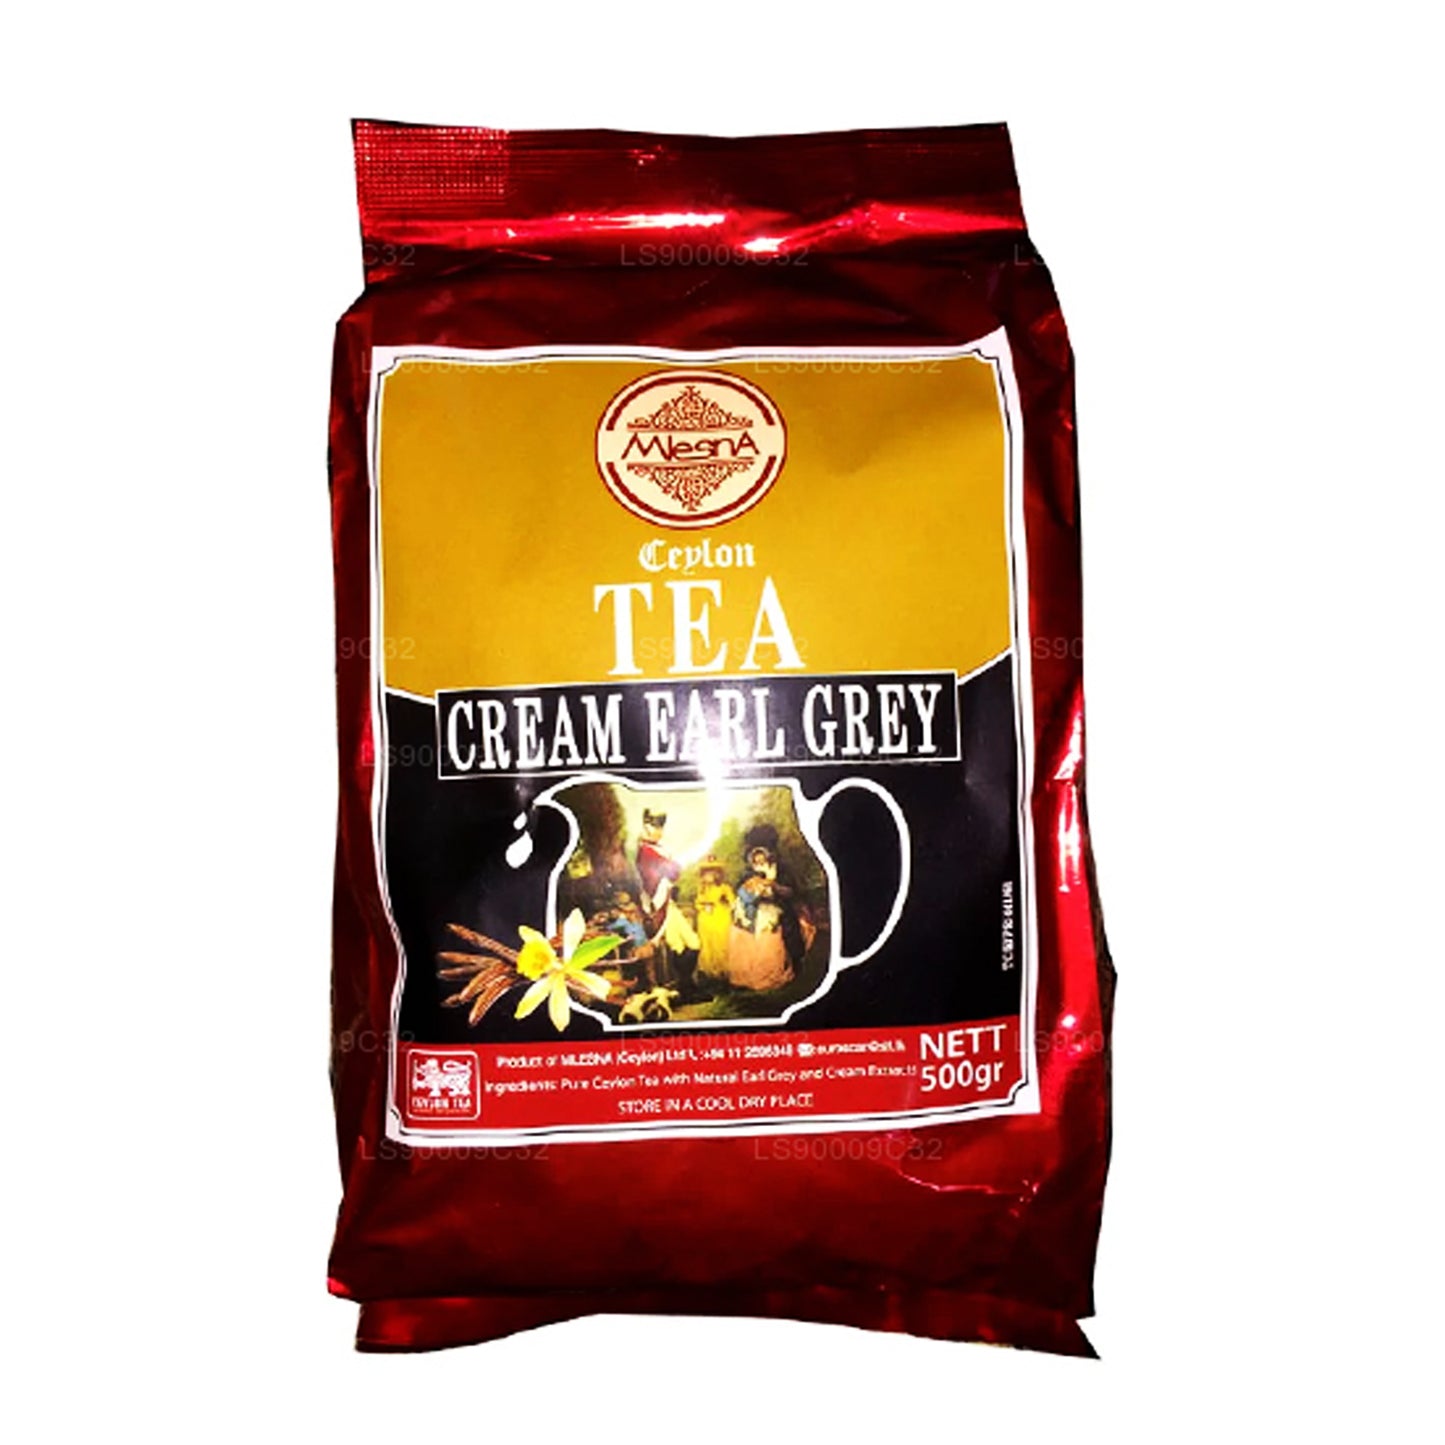 Mlesna Cream Earl Grey thee (500 g)